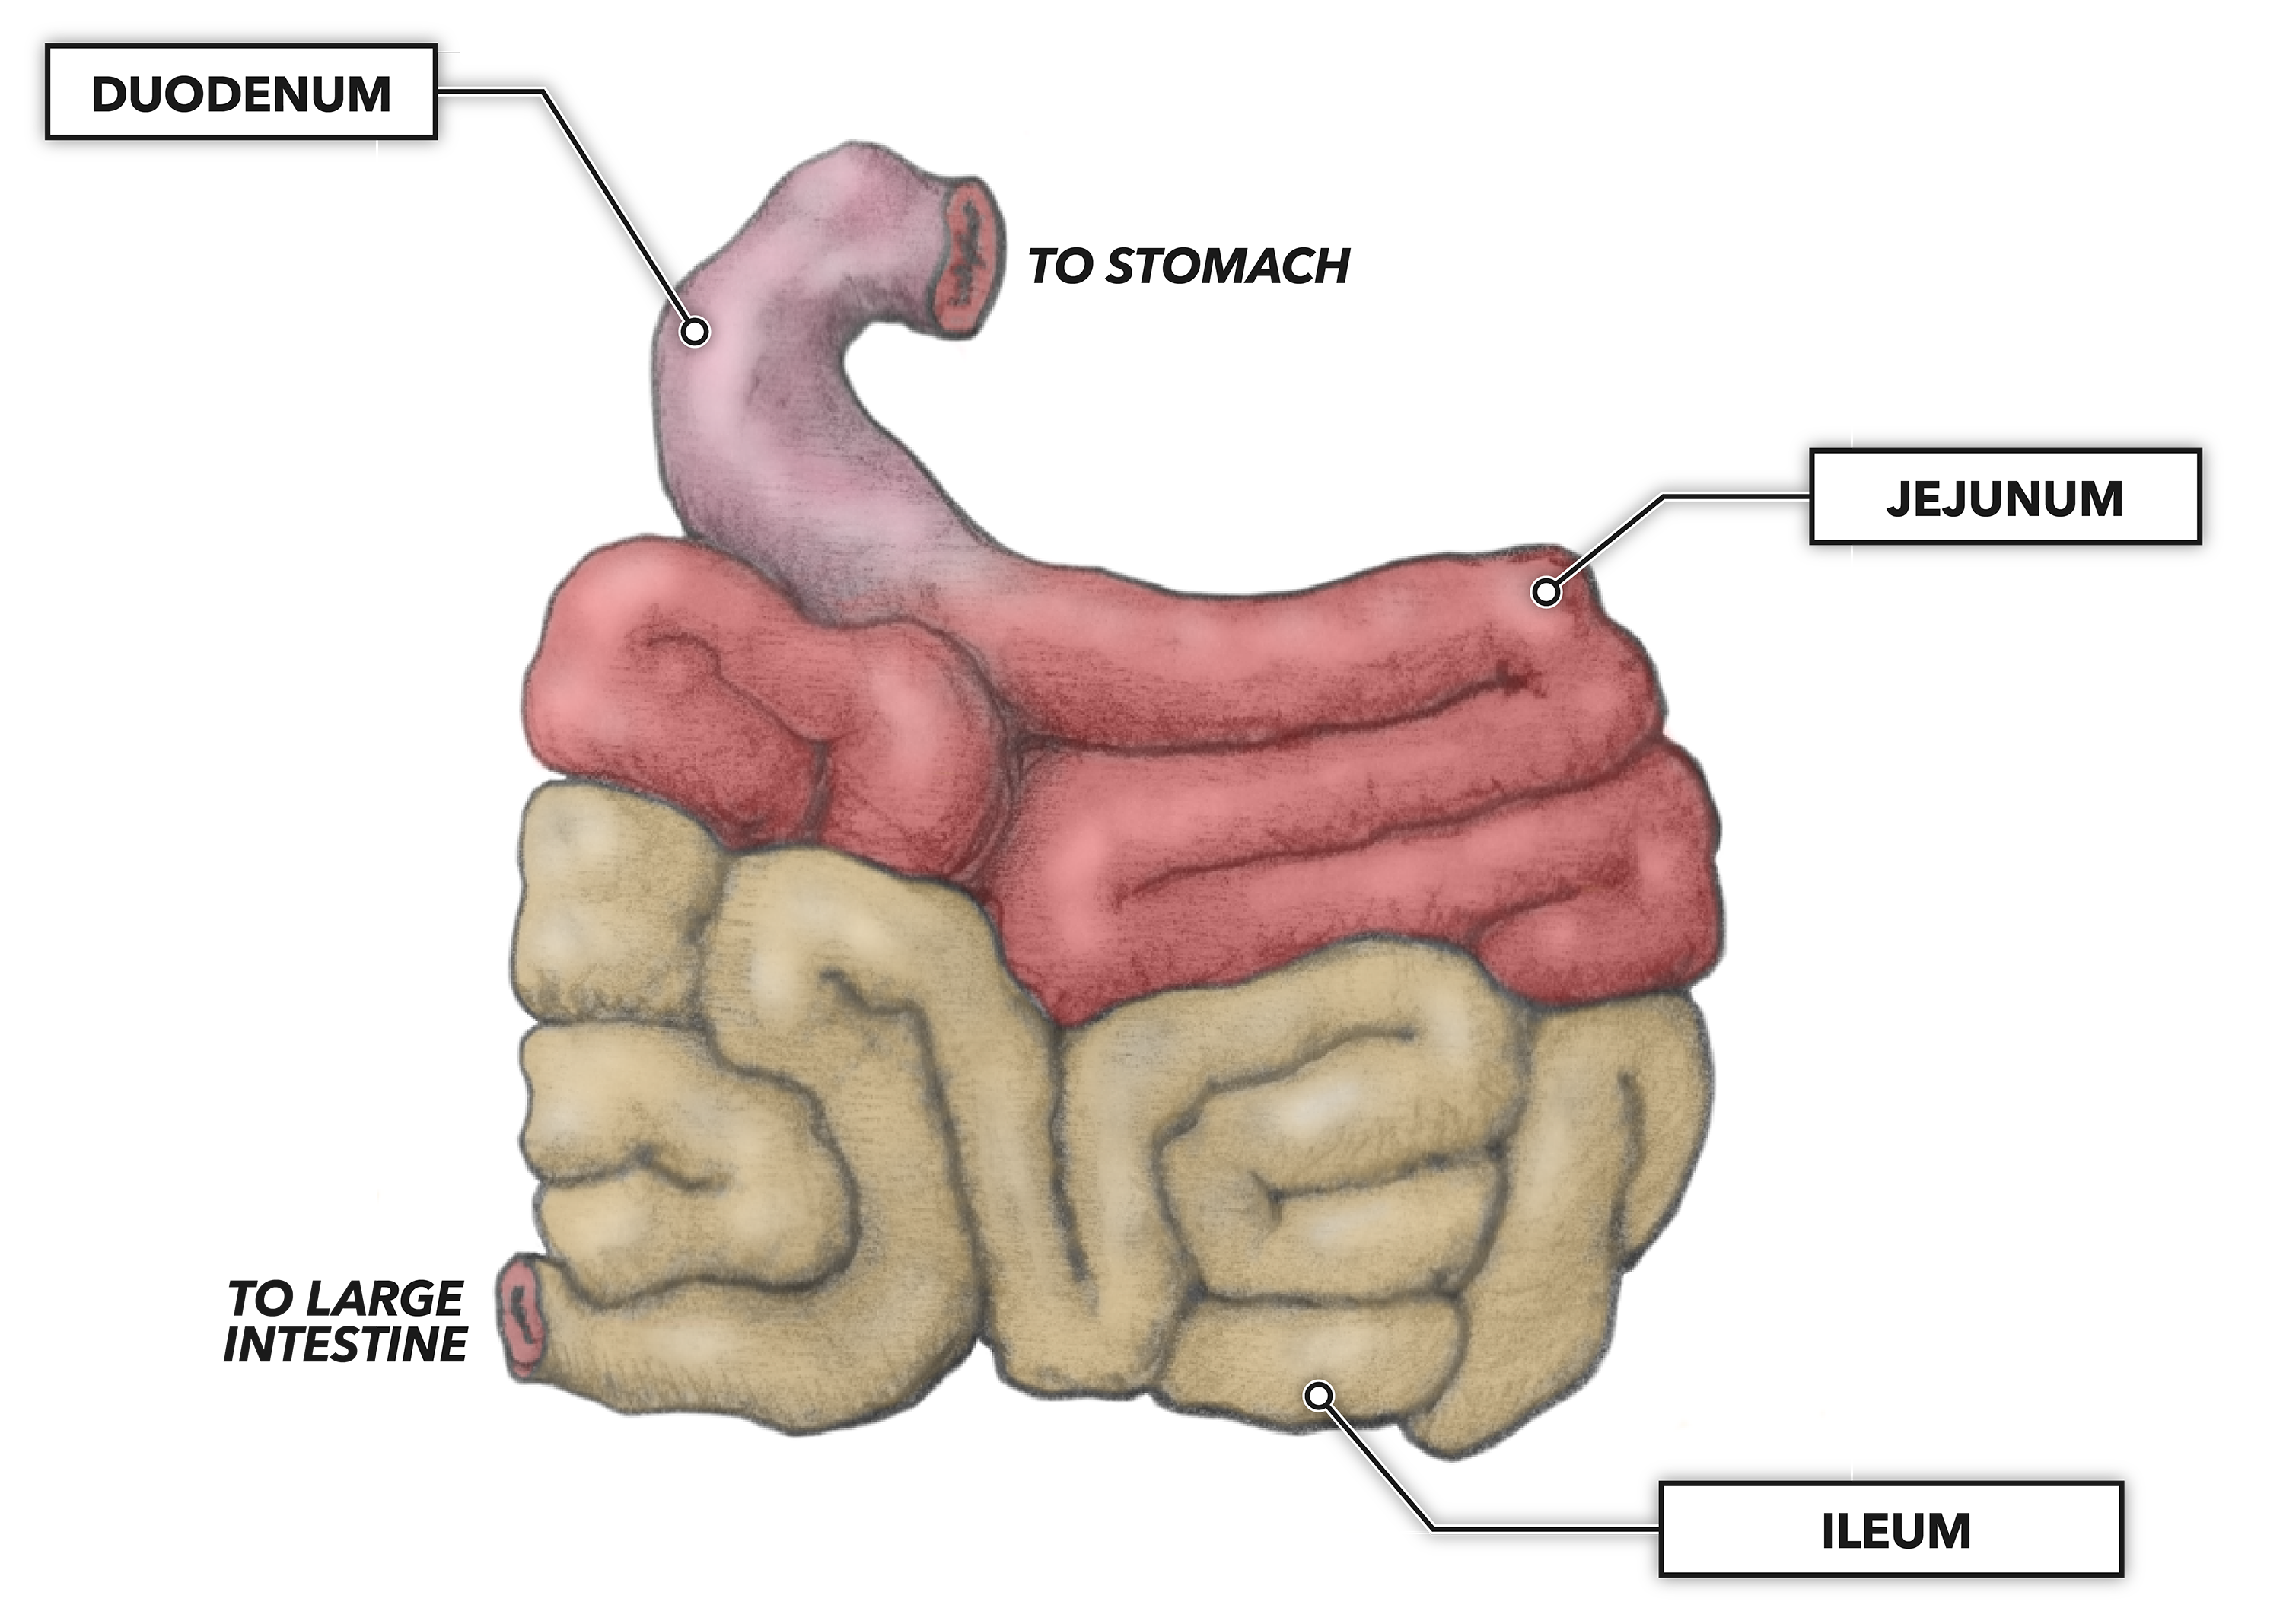 Intestine Labeled Diagram